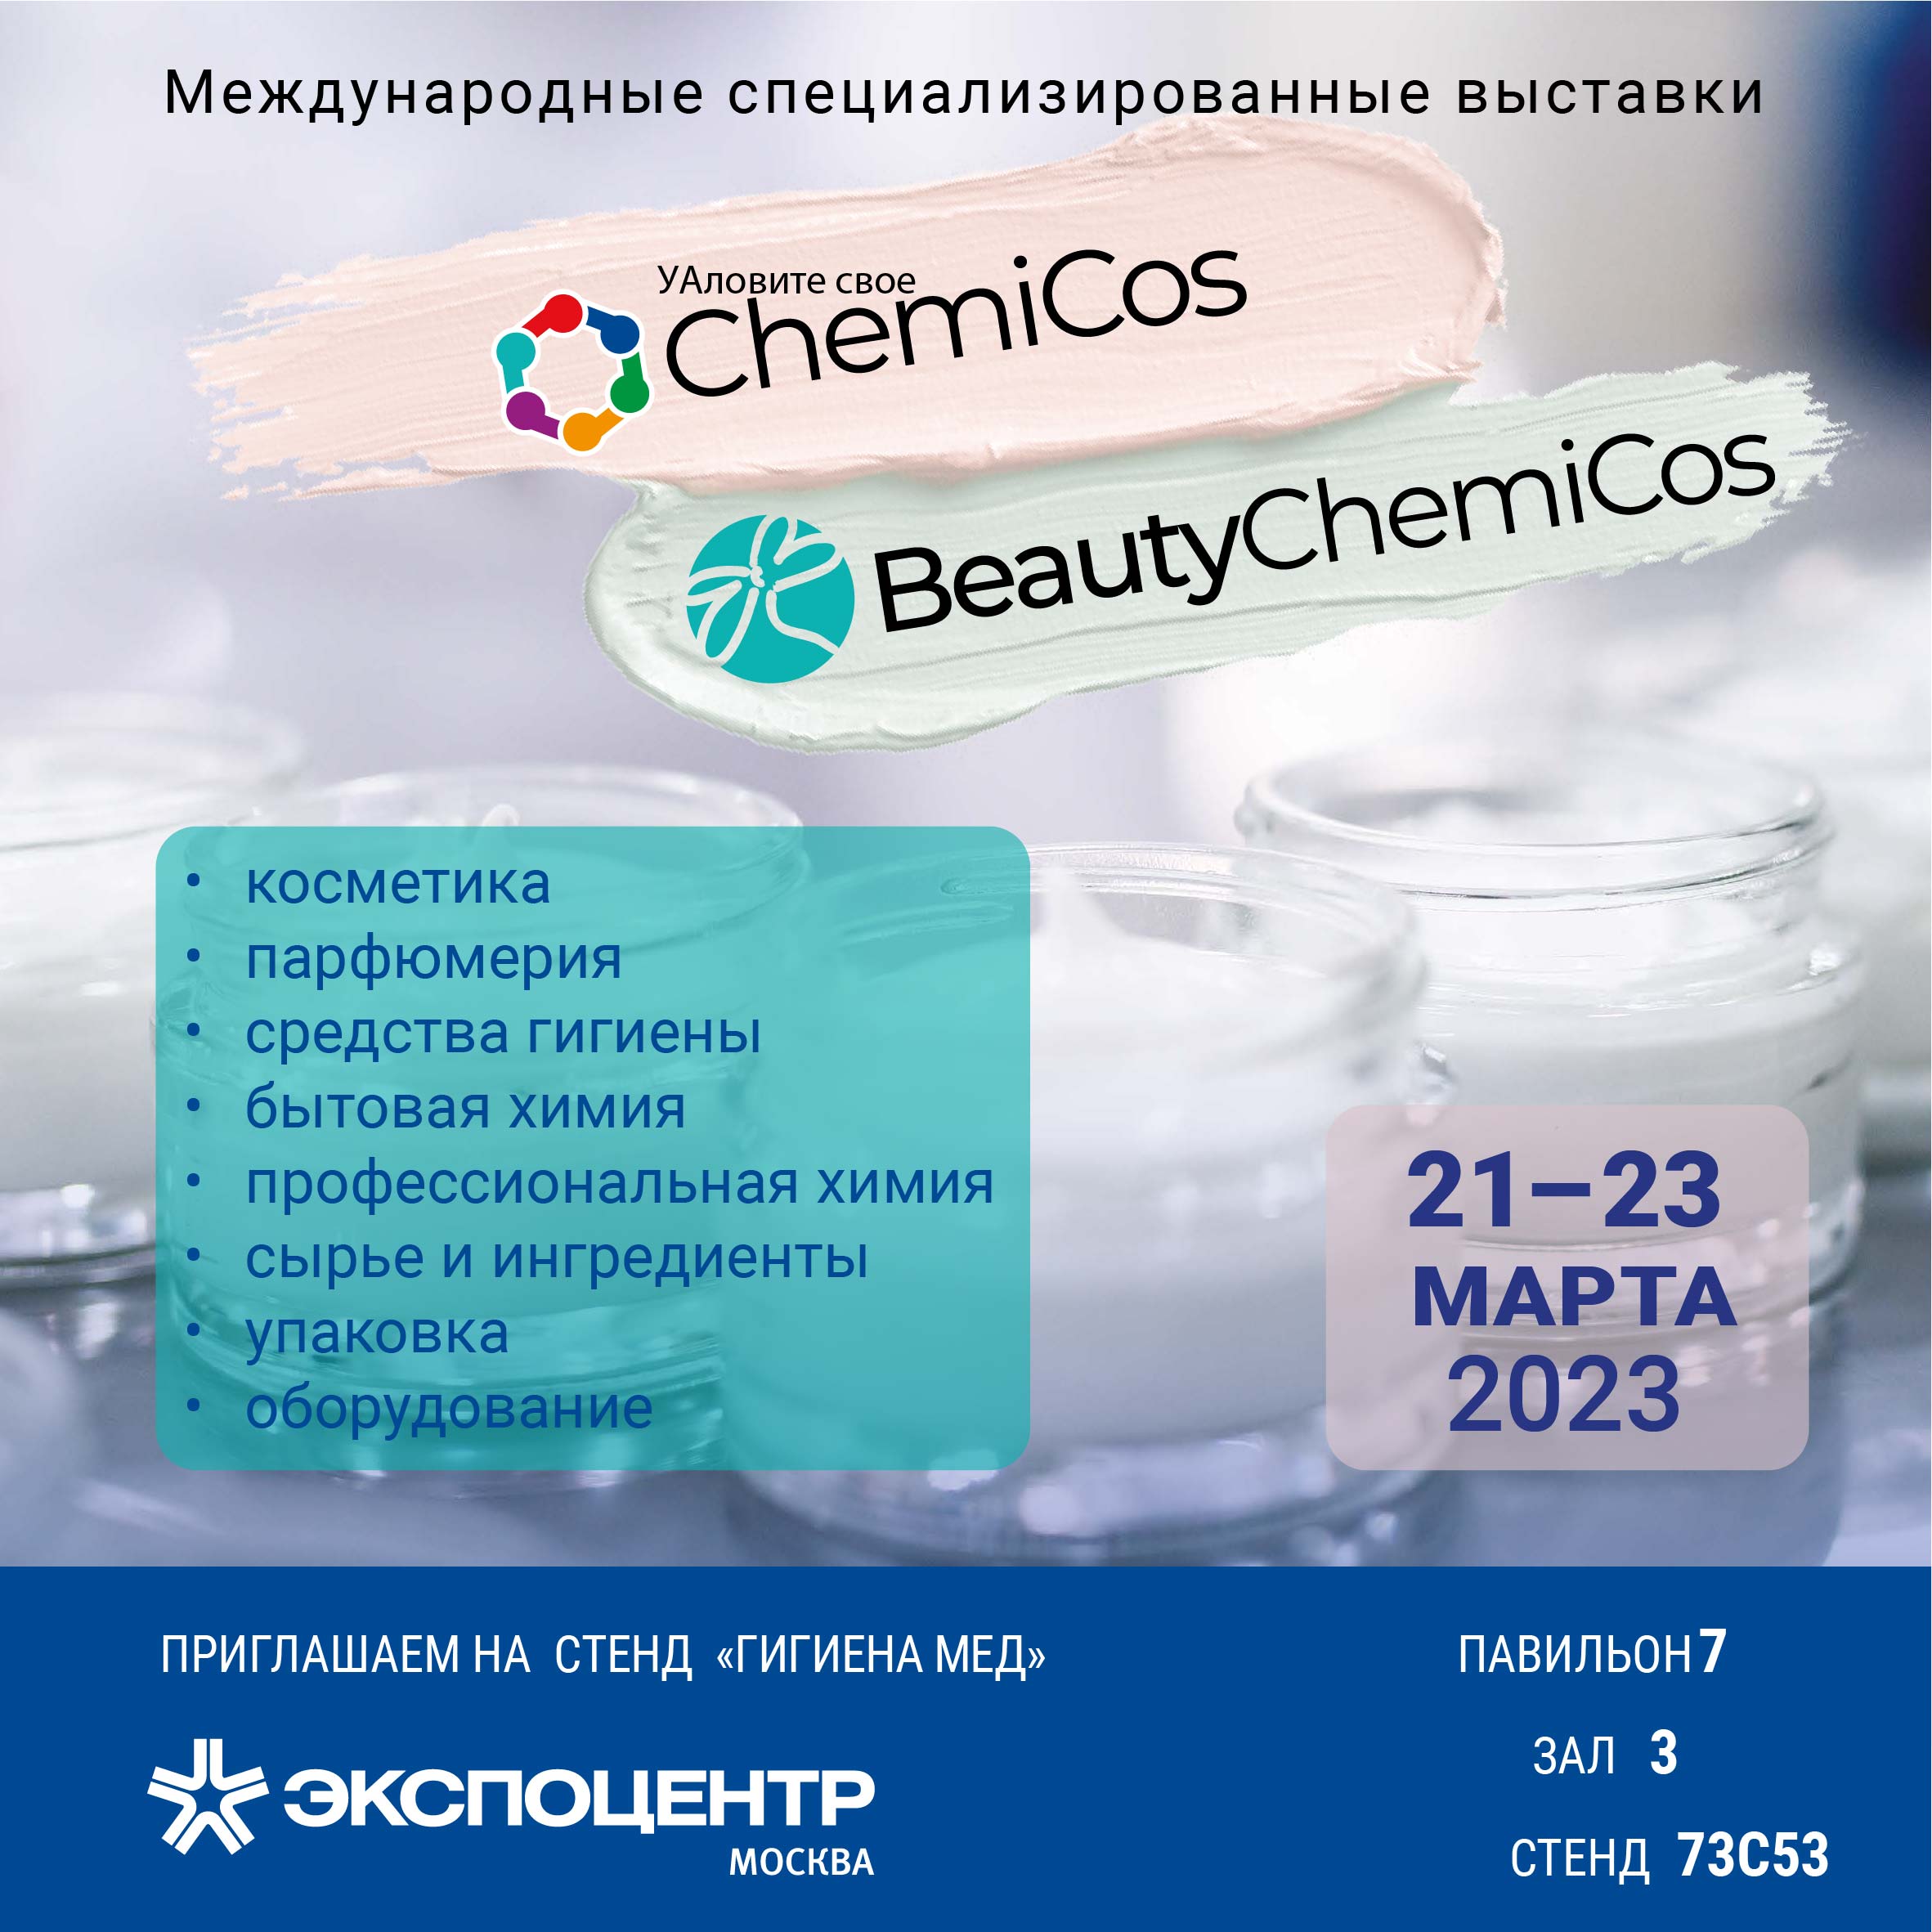 Бытовая химия HOMELINE на выставке Chemicos 2023